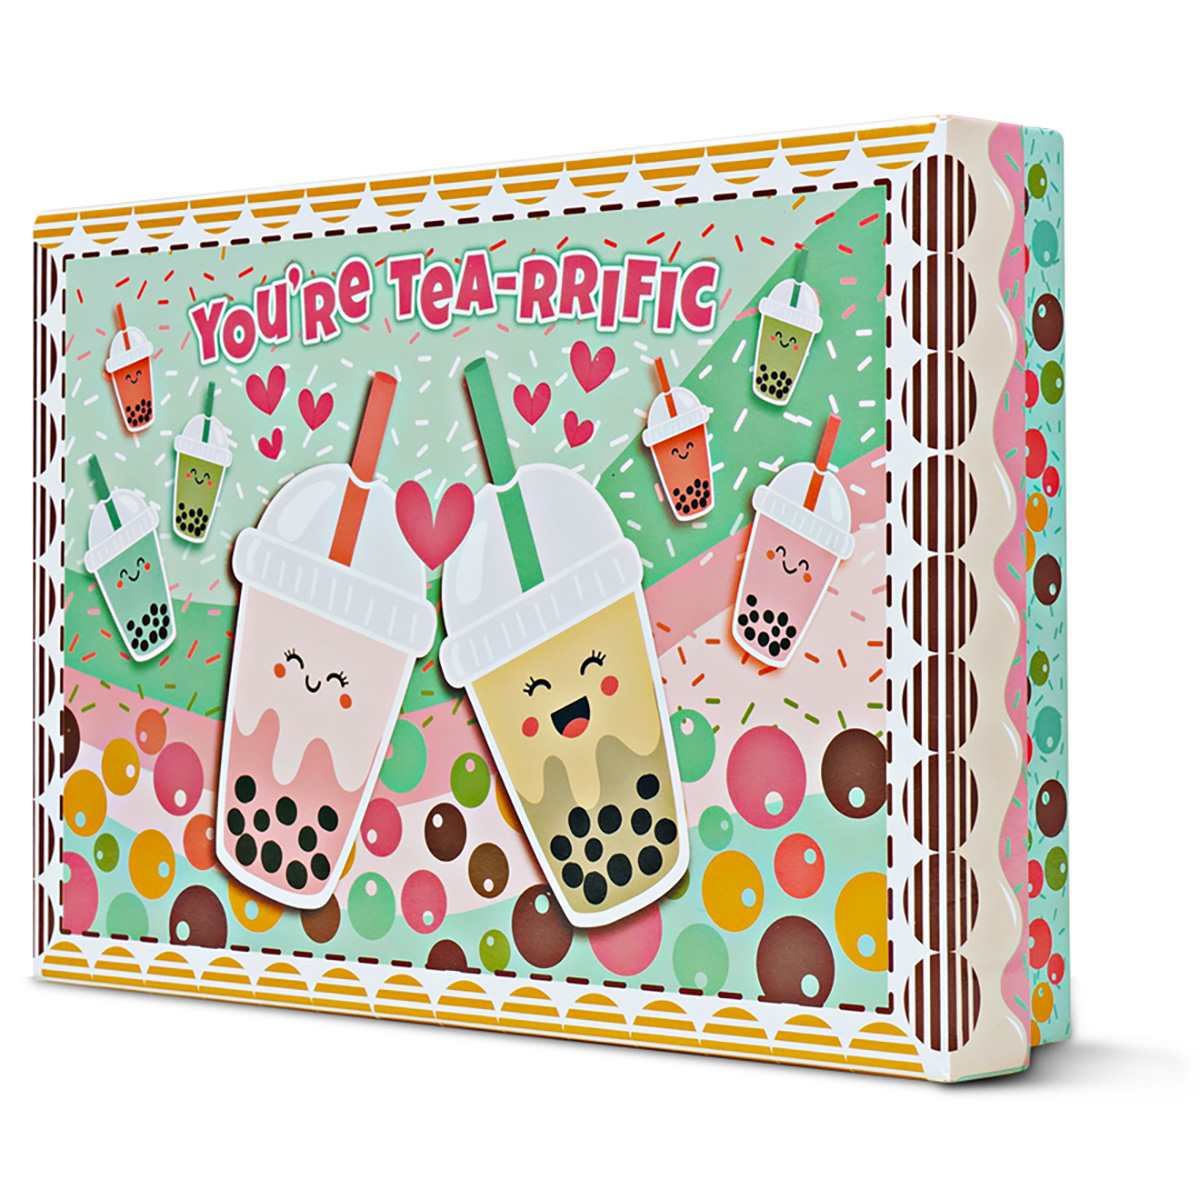  You're Tea-rrific: Boba Tea Stationery Box 